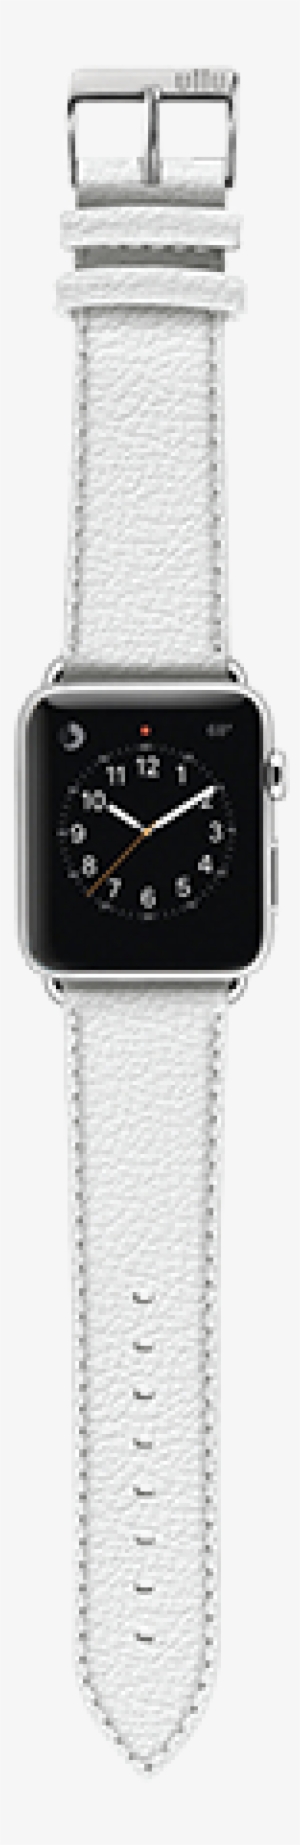 Ullu Premium Leather Apple Watch Band In Walter White - Apple Watch